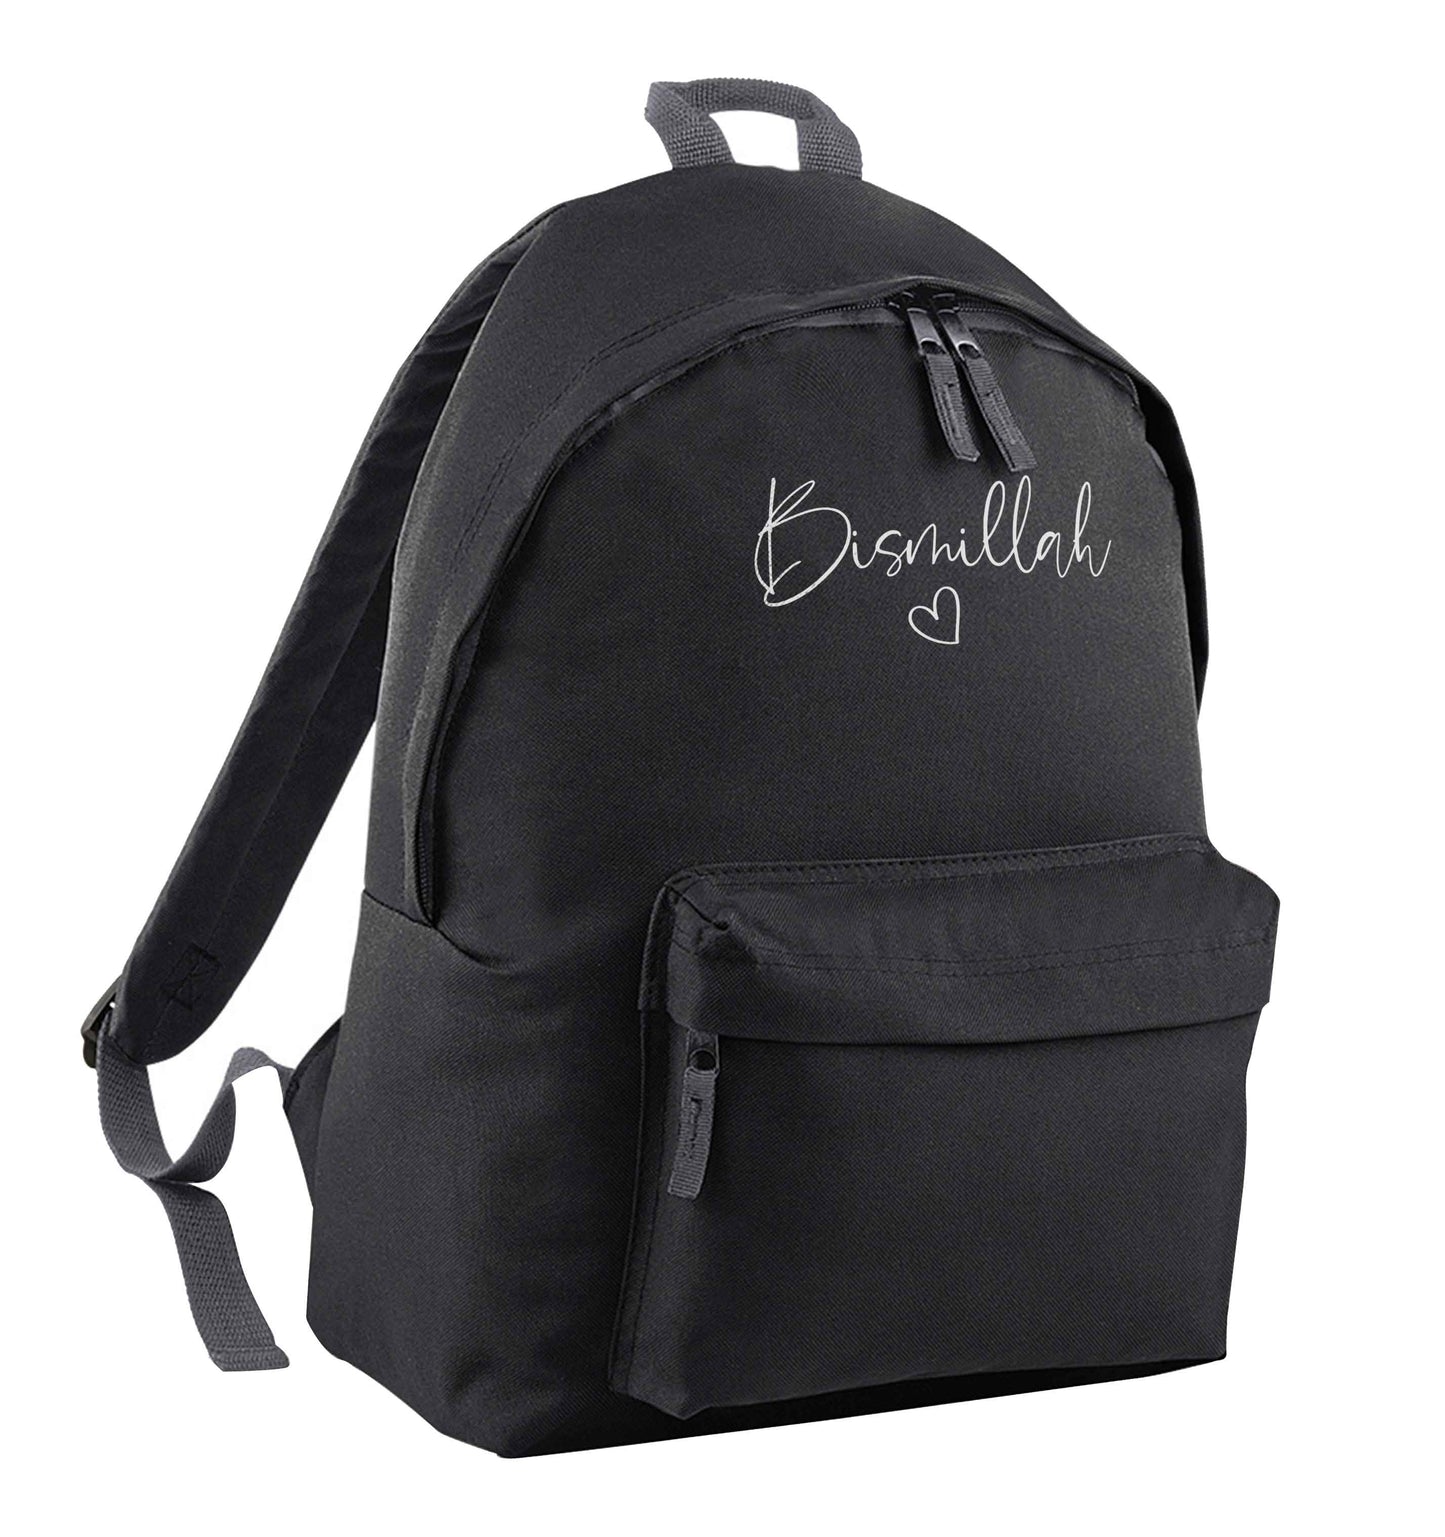 Bismillah black children's backpack